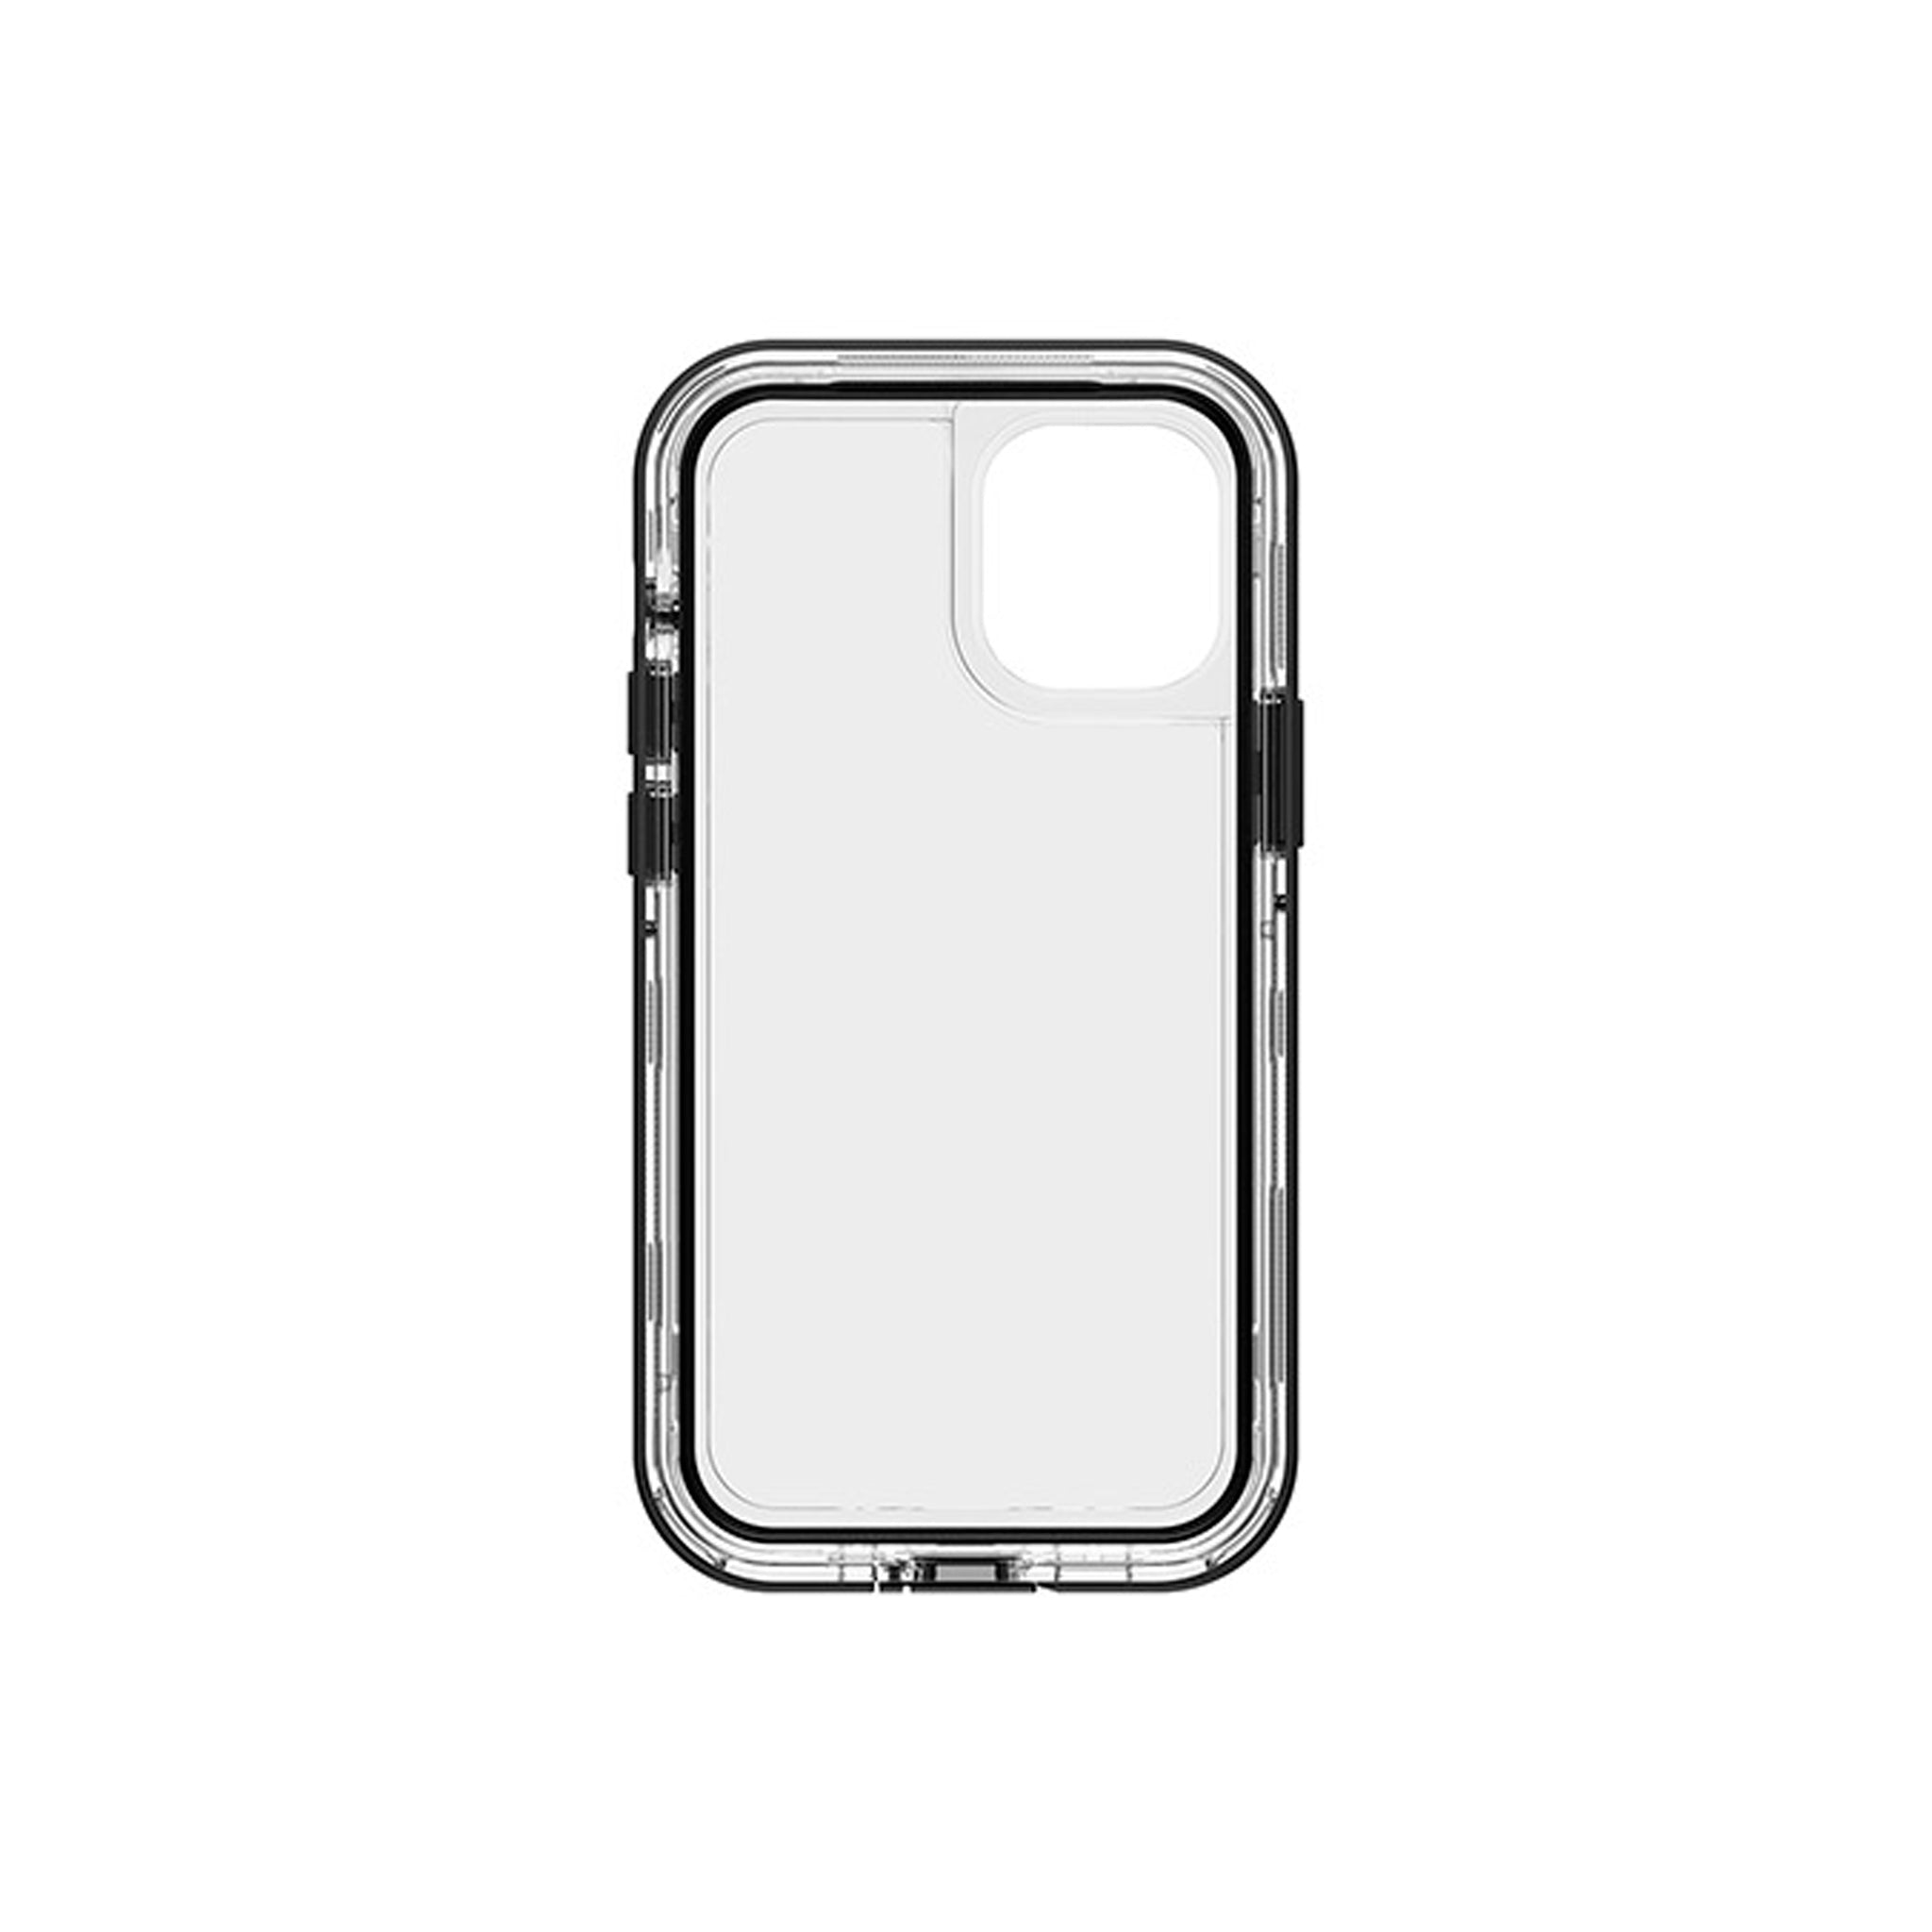 LifeProo - Next for iPhone 12 mini - Black Crystal